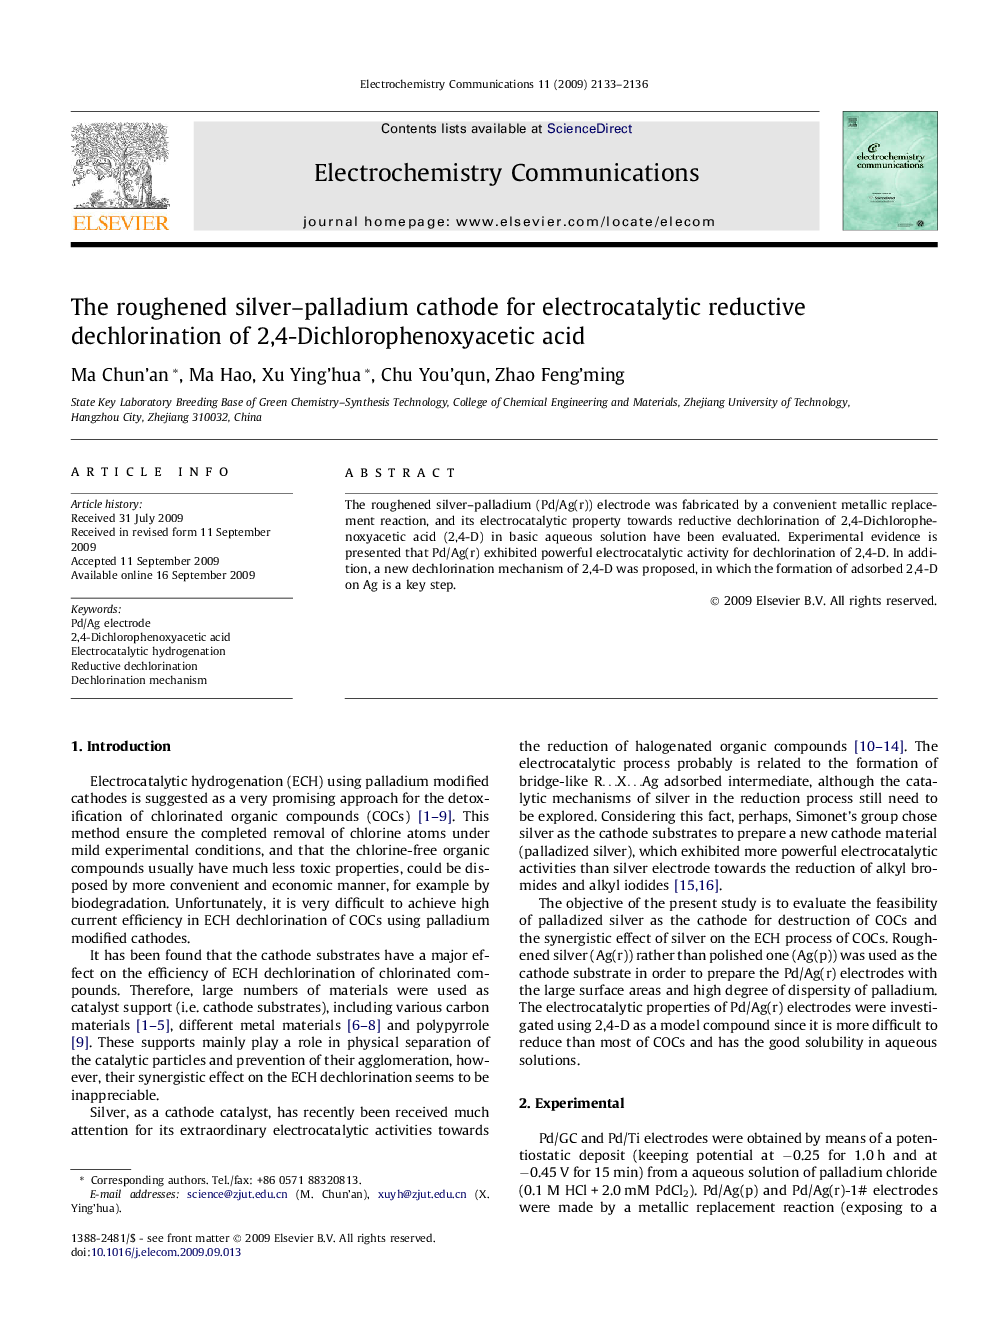 The roughened silver–palladium cathode for electrocatalytic reductive dechlorination of 2,4-Dichlorophenoxyacetic acid